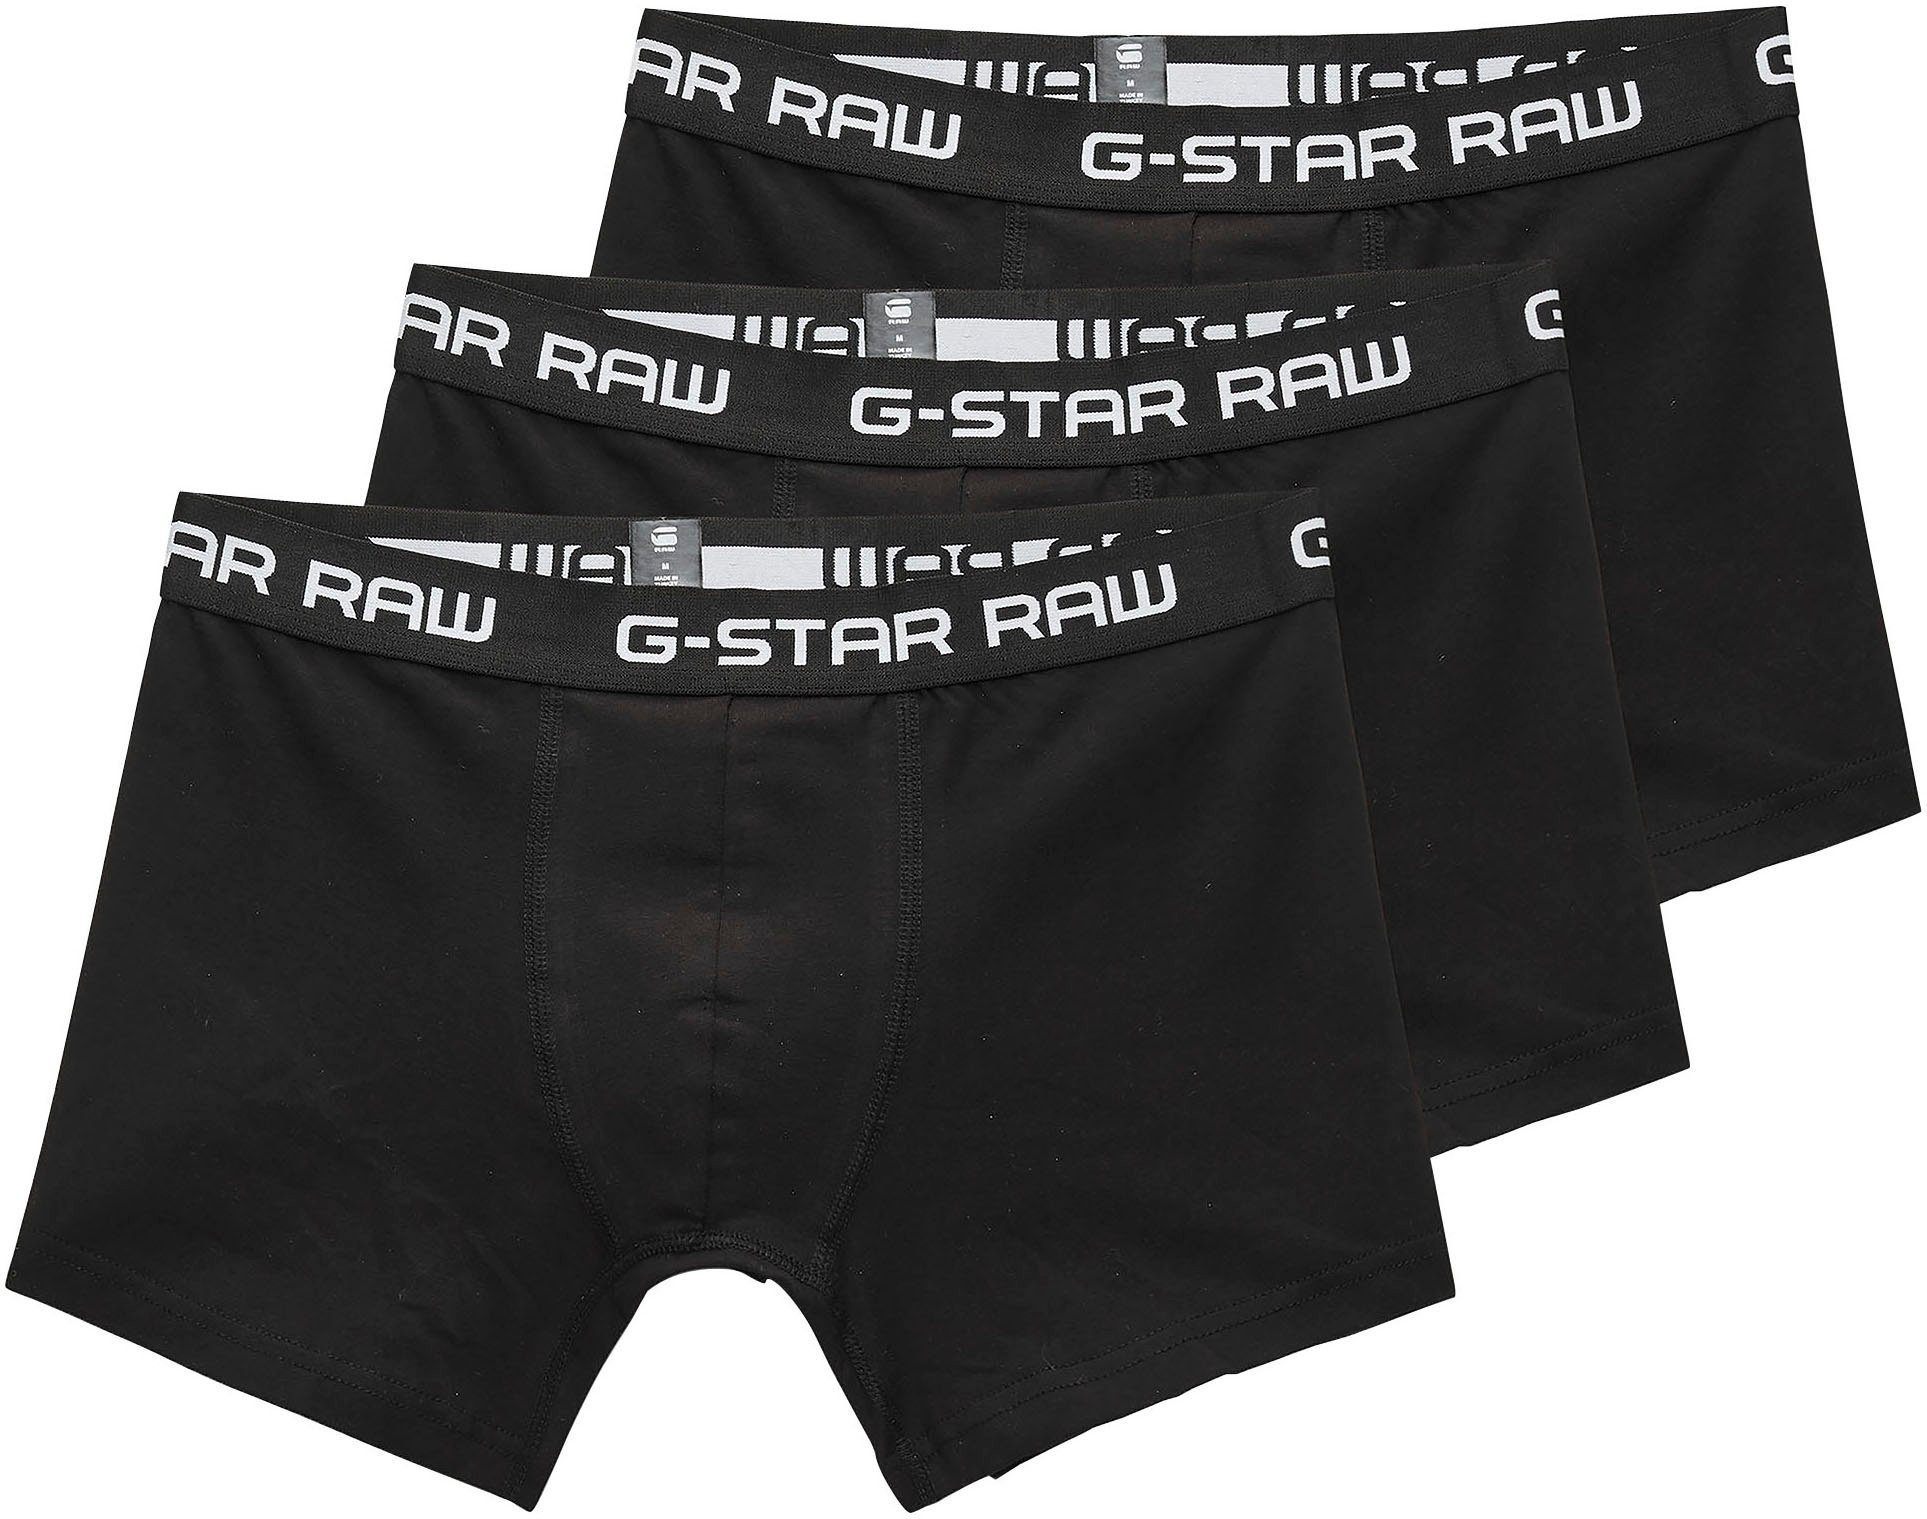 G-STAR RAW Herren Classic Trunk CLR 3 Pack Boxershorts 3er Pack 